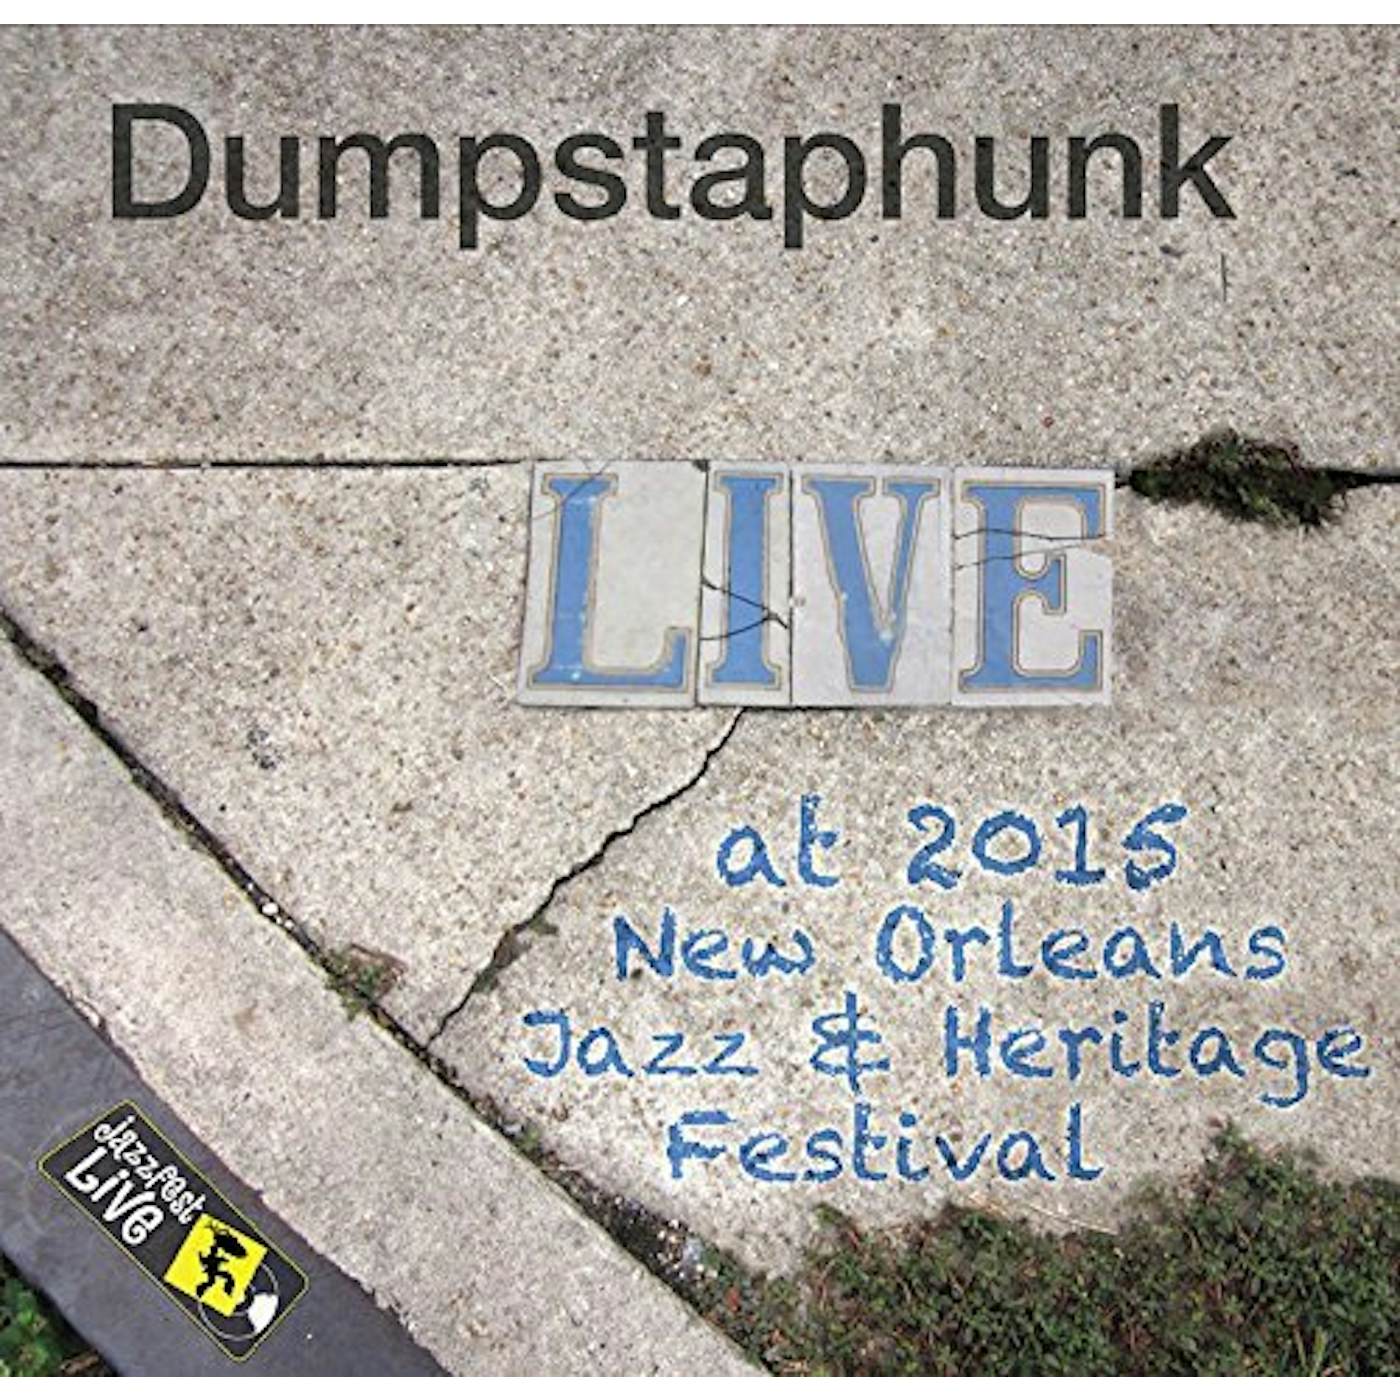 Dumpstaphunk JAZZFEST 2015 CD